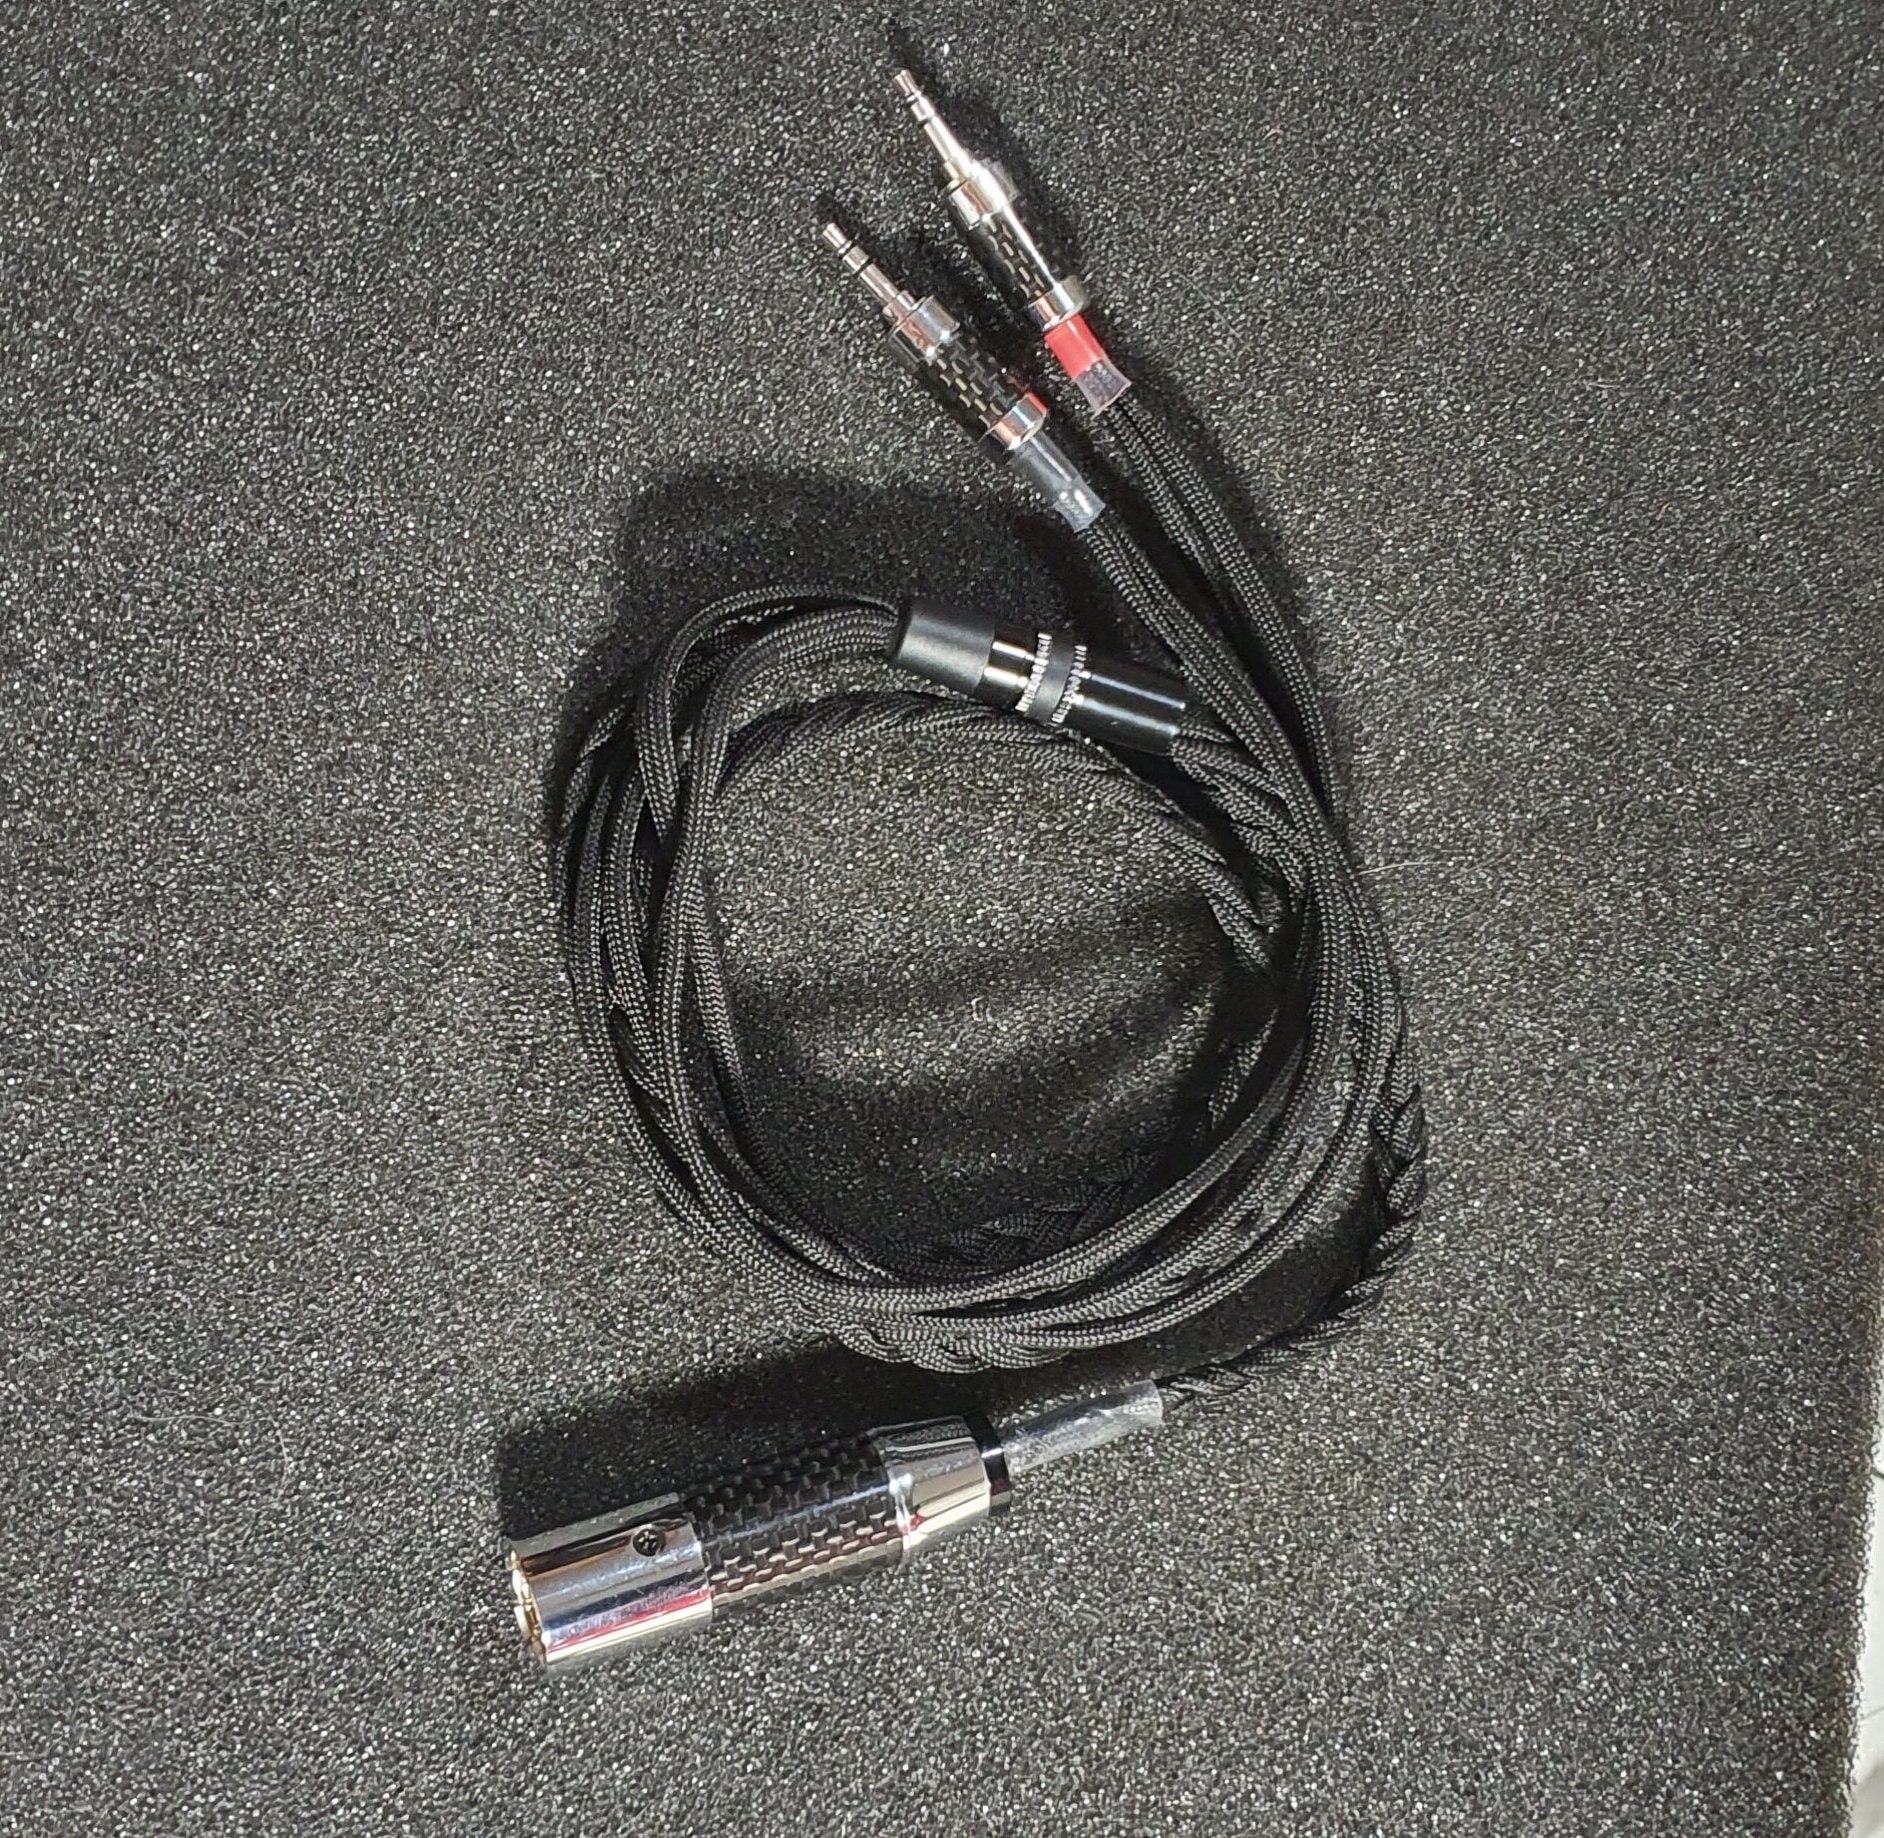 HiFiMAN / V1000 /  Ananda / Sundara / Arya Planar Magnetic | Suit / 2.5mm & 3.5mm to 4-Pin XLR or 4.4mm Balanced) Headphone Cable Upgrade